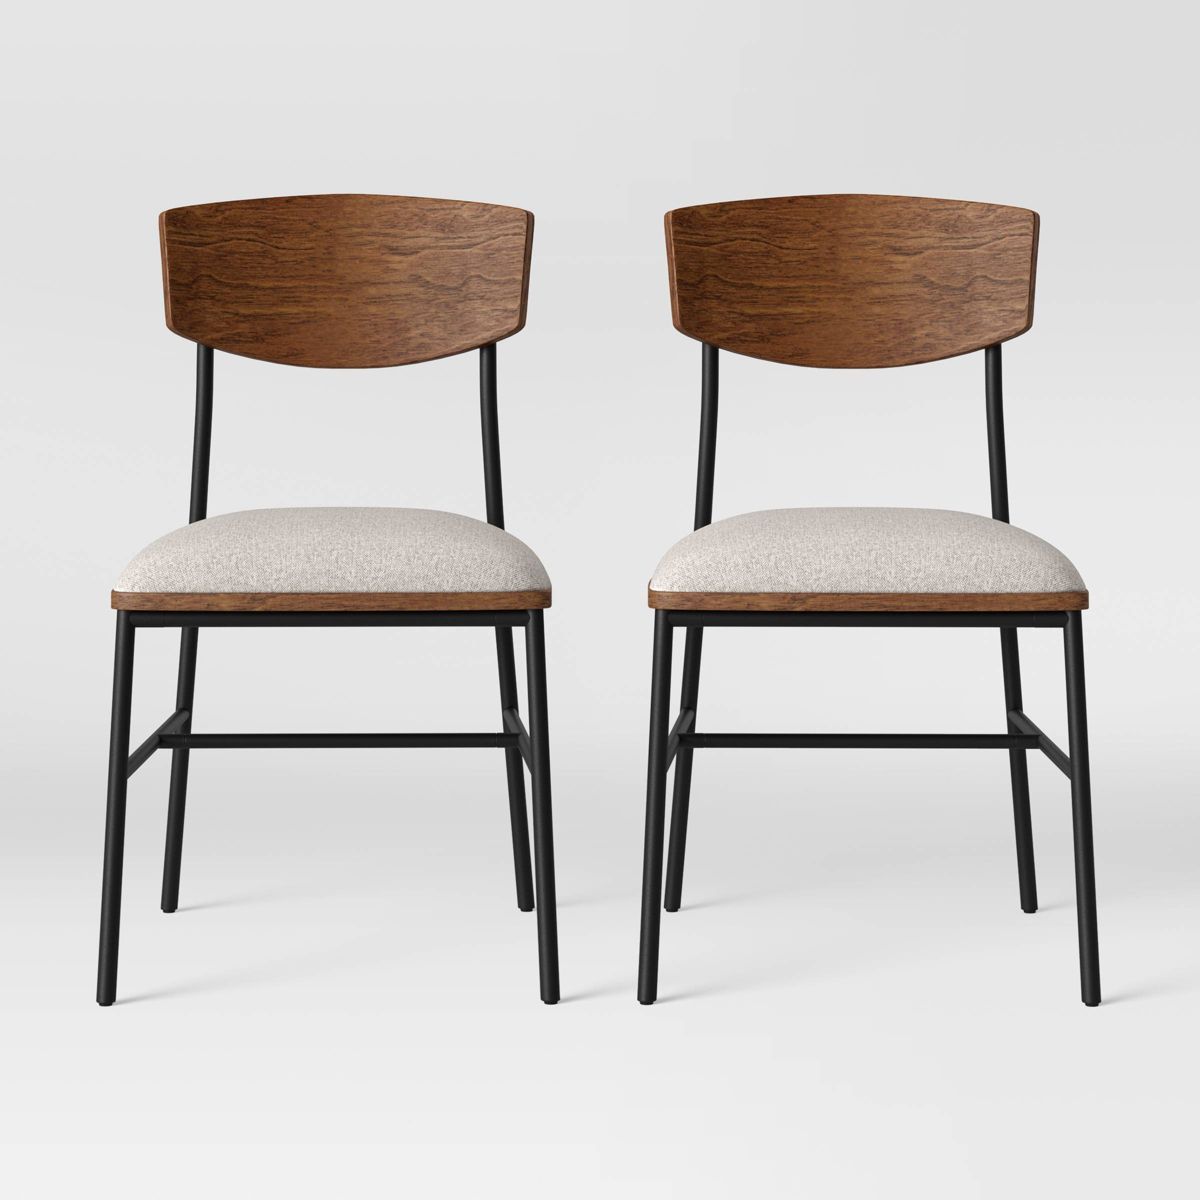 2pk Telstar Mid-Century Modern Mixed Material Dining Chair - Threshold™ | Target